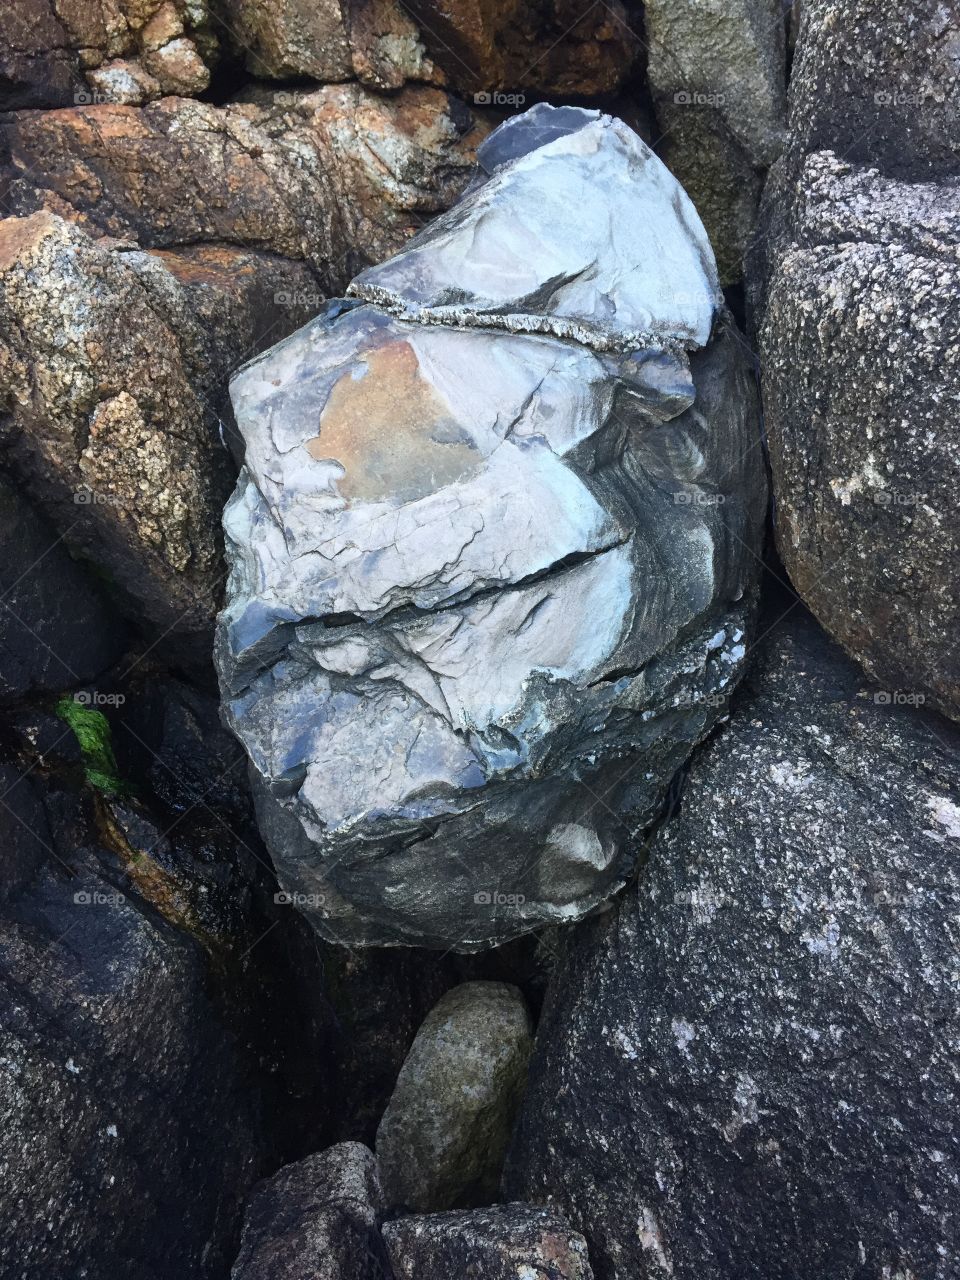 Metallic looking rock find on the beach